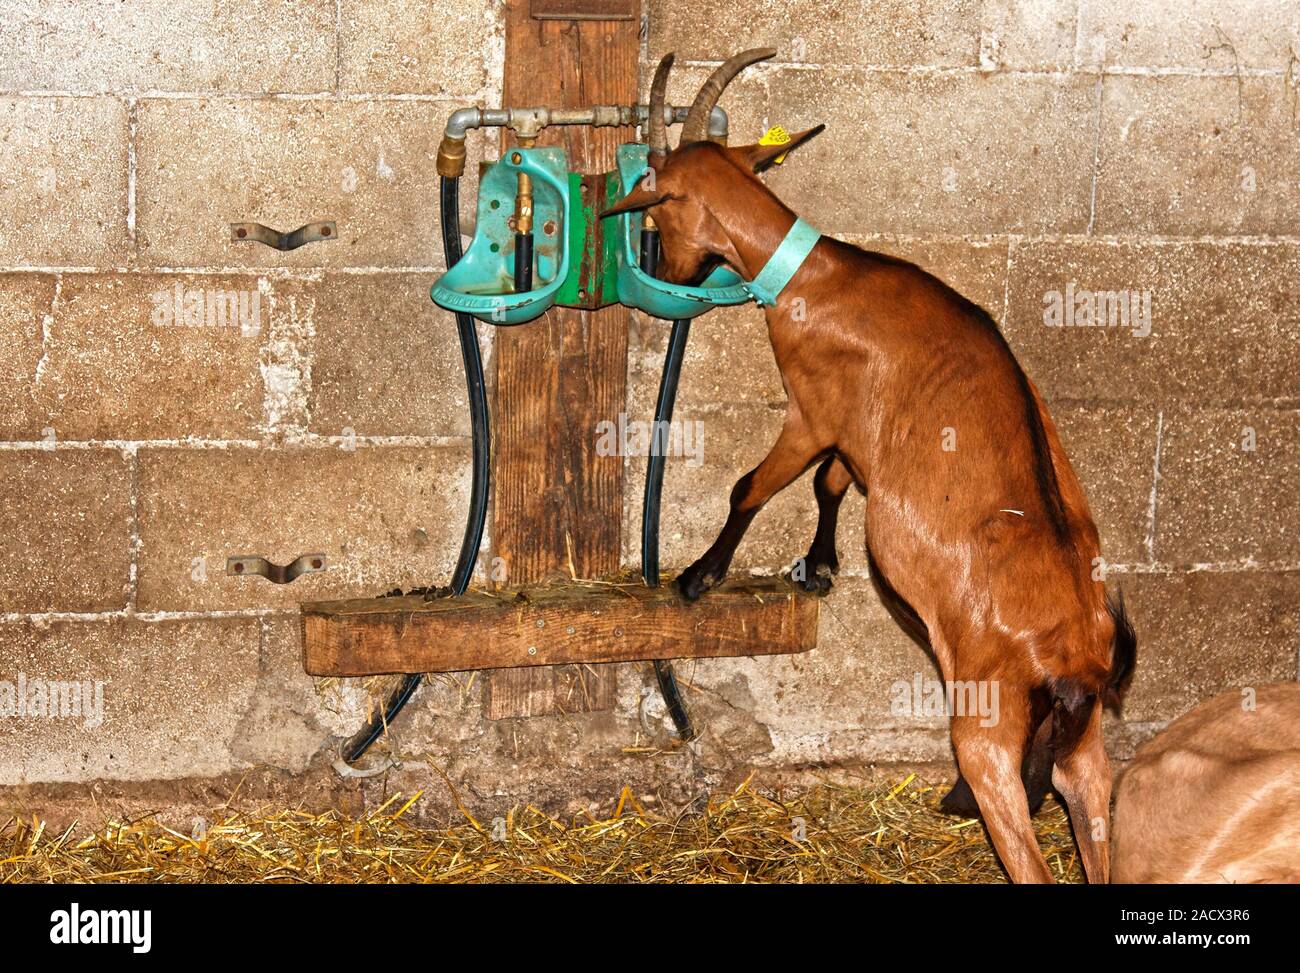 goat, drinking water, raised basin, barn, straw, short horns, collar, ear ID tag, farm animal, Macon; France; horizontal Stock Photo